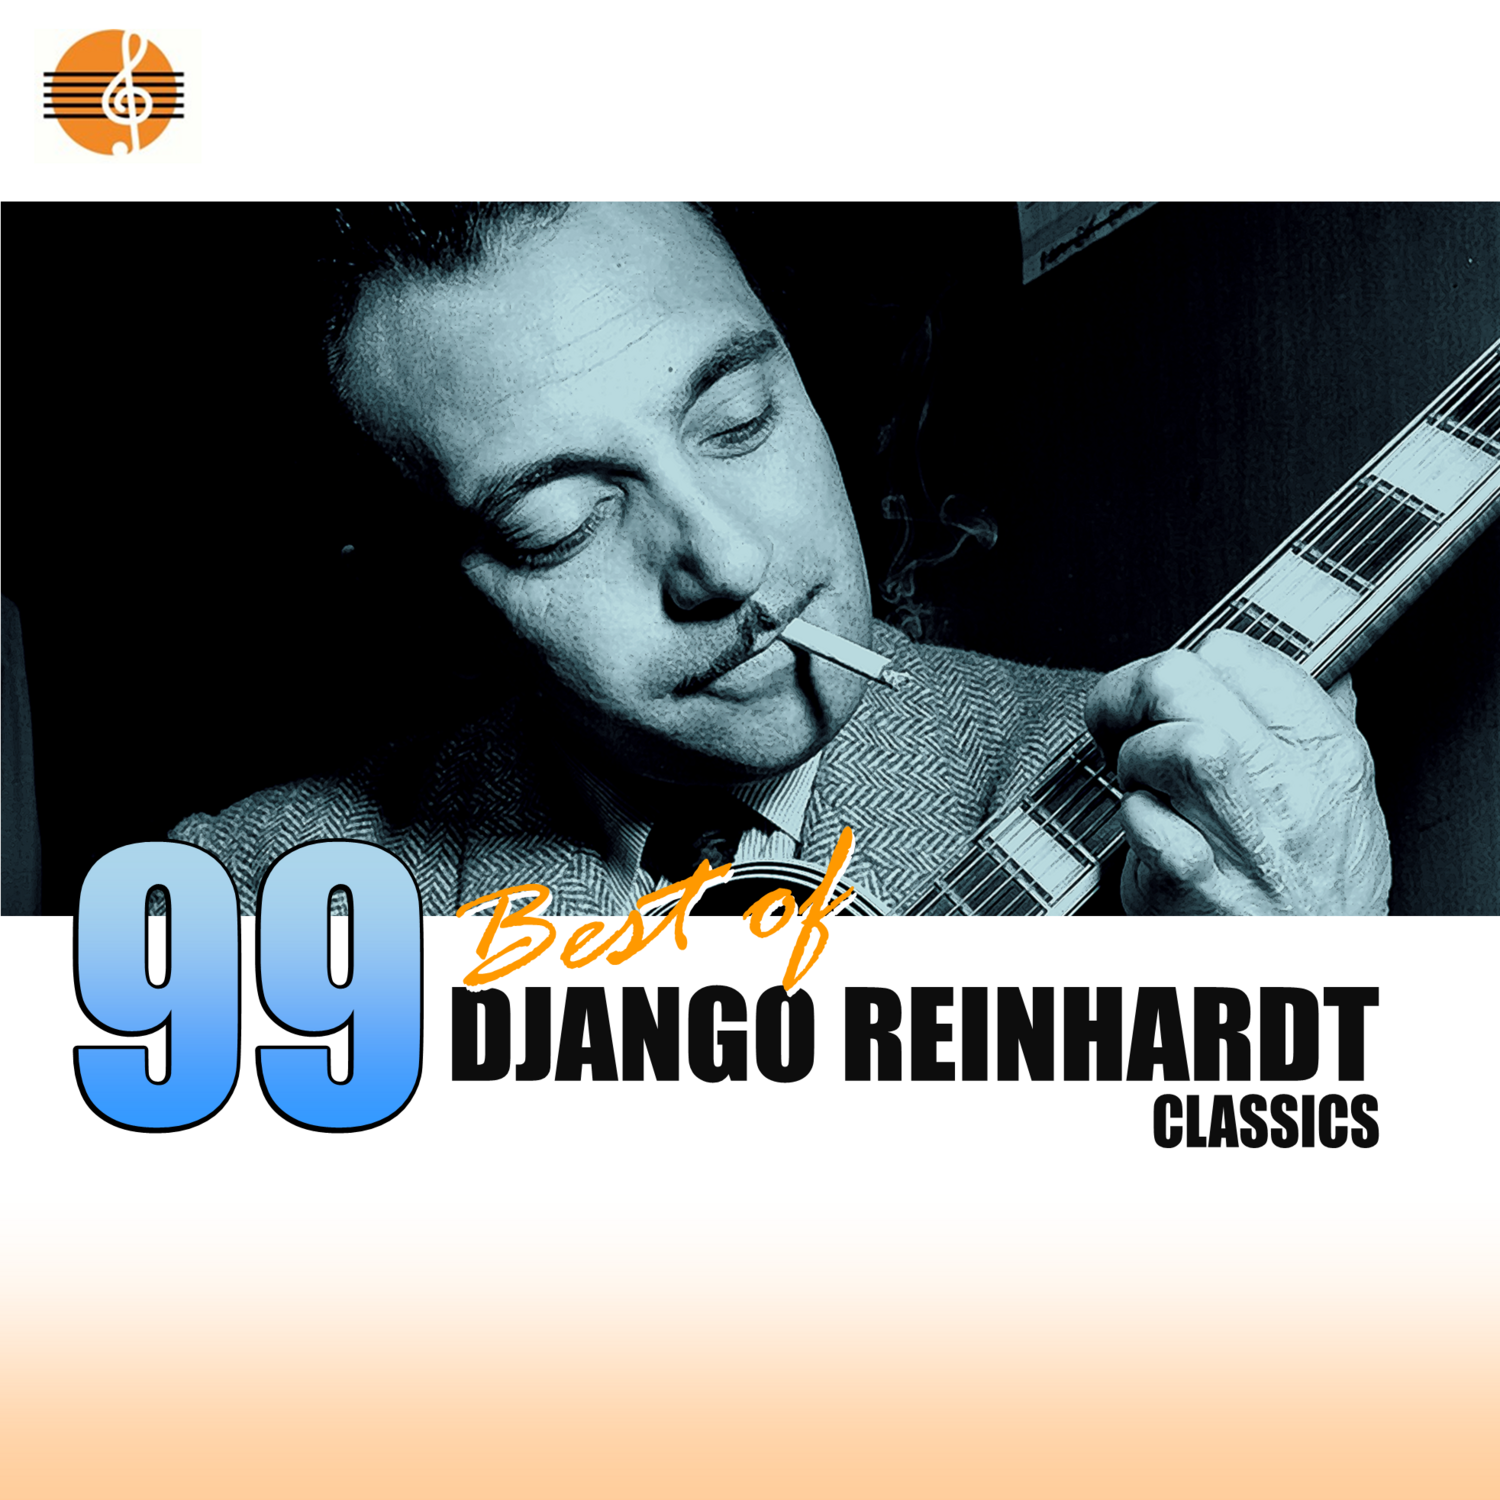 99 Best of Django Reinhardt Classics